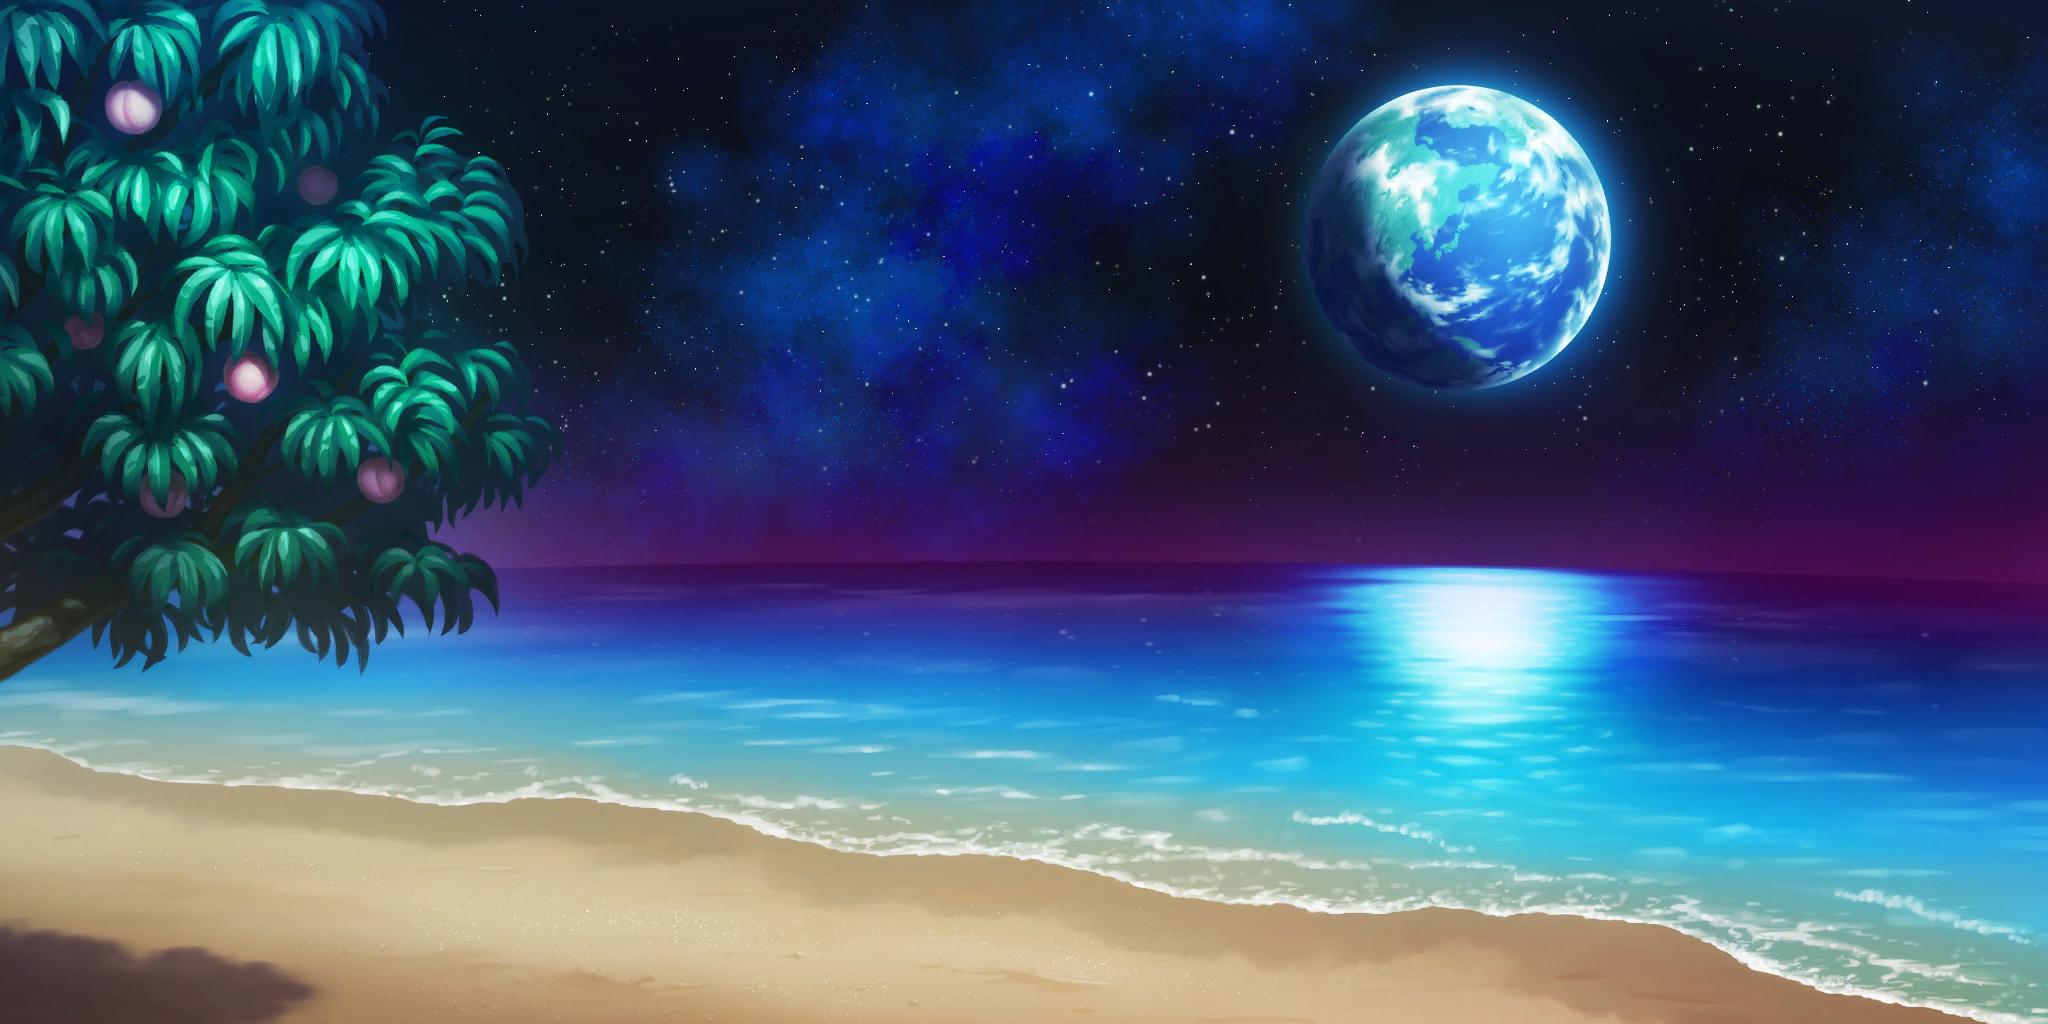 Touhou LostWord - Moon (Sea of Prosperity's Shore)